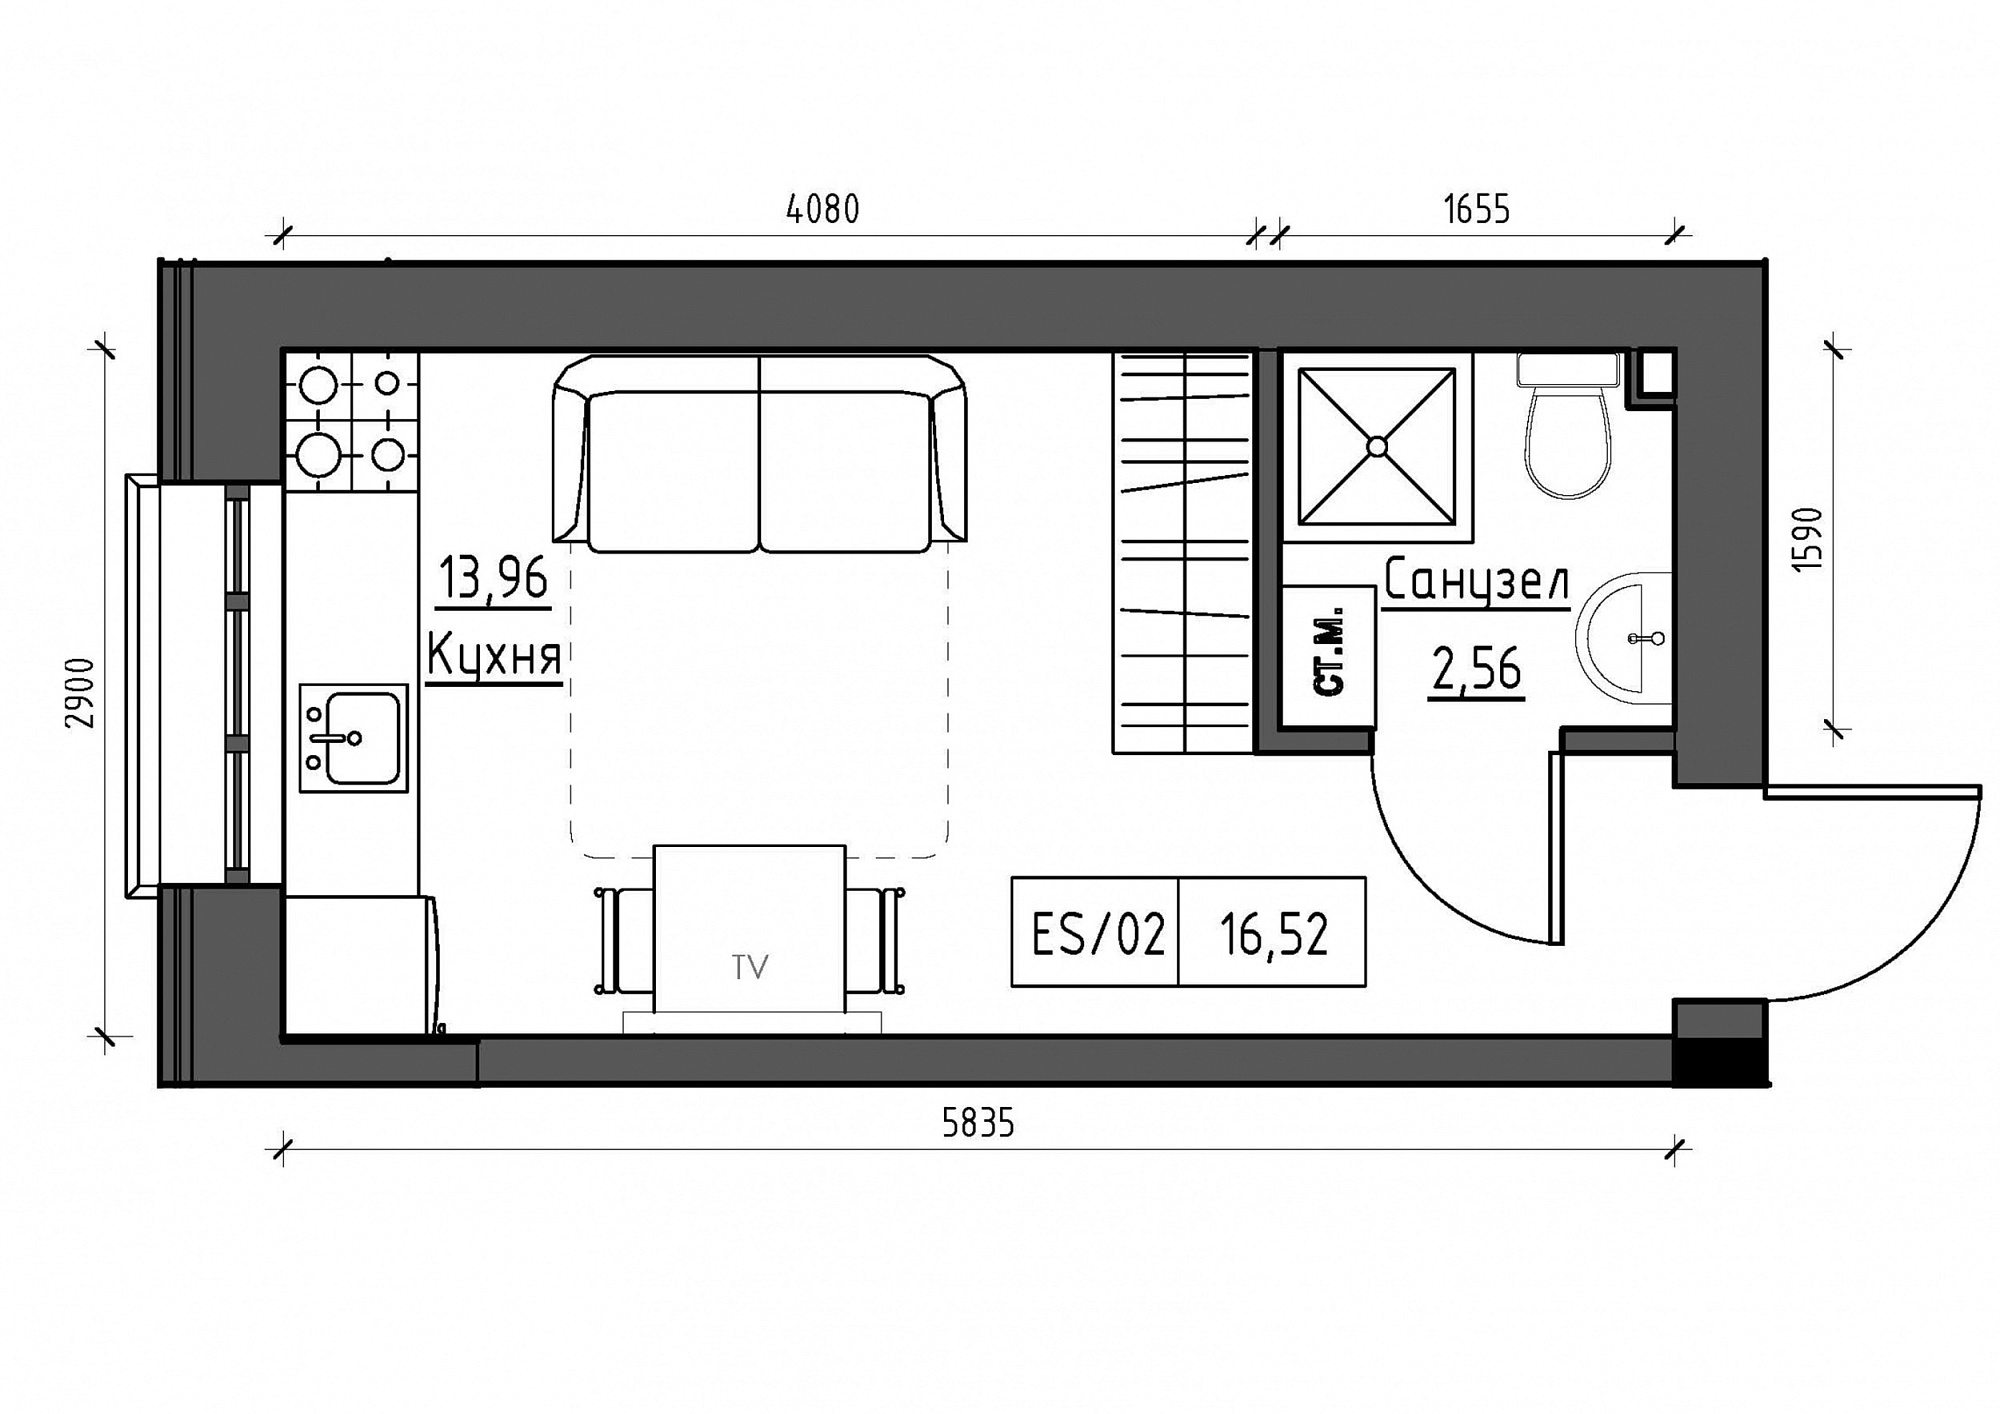 Planning Smart flats area 16.52m2, KS-012-05/0014.